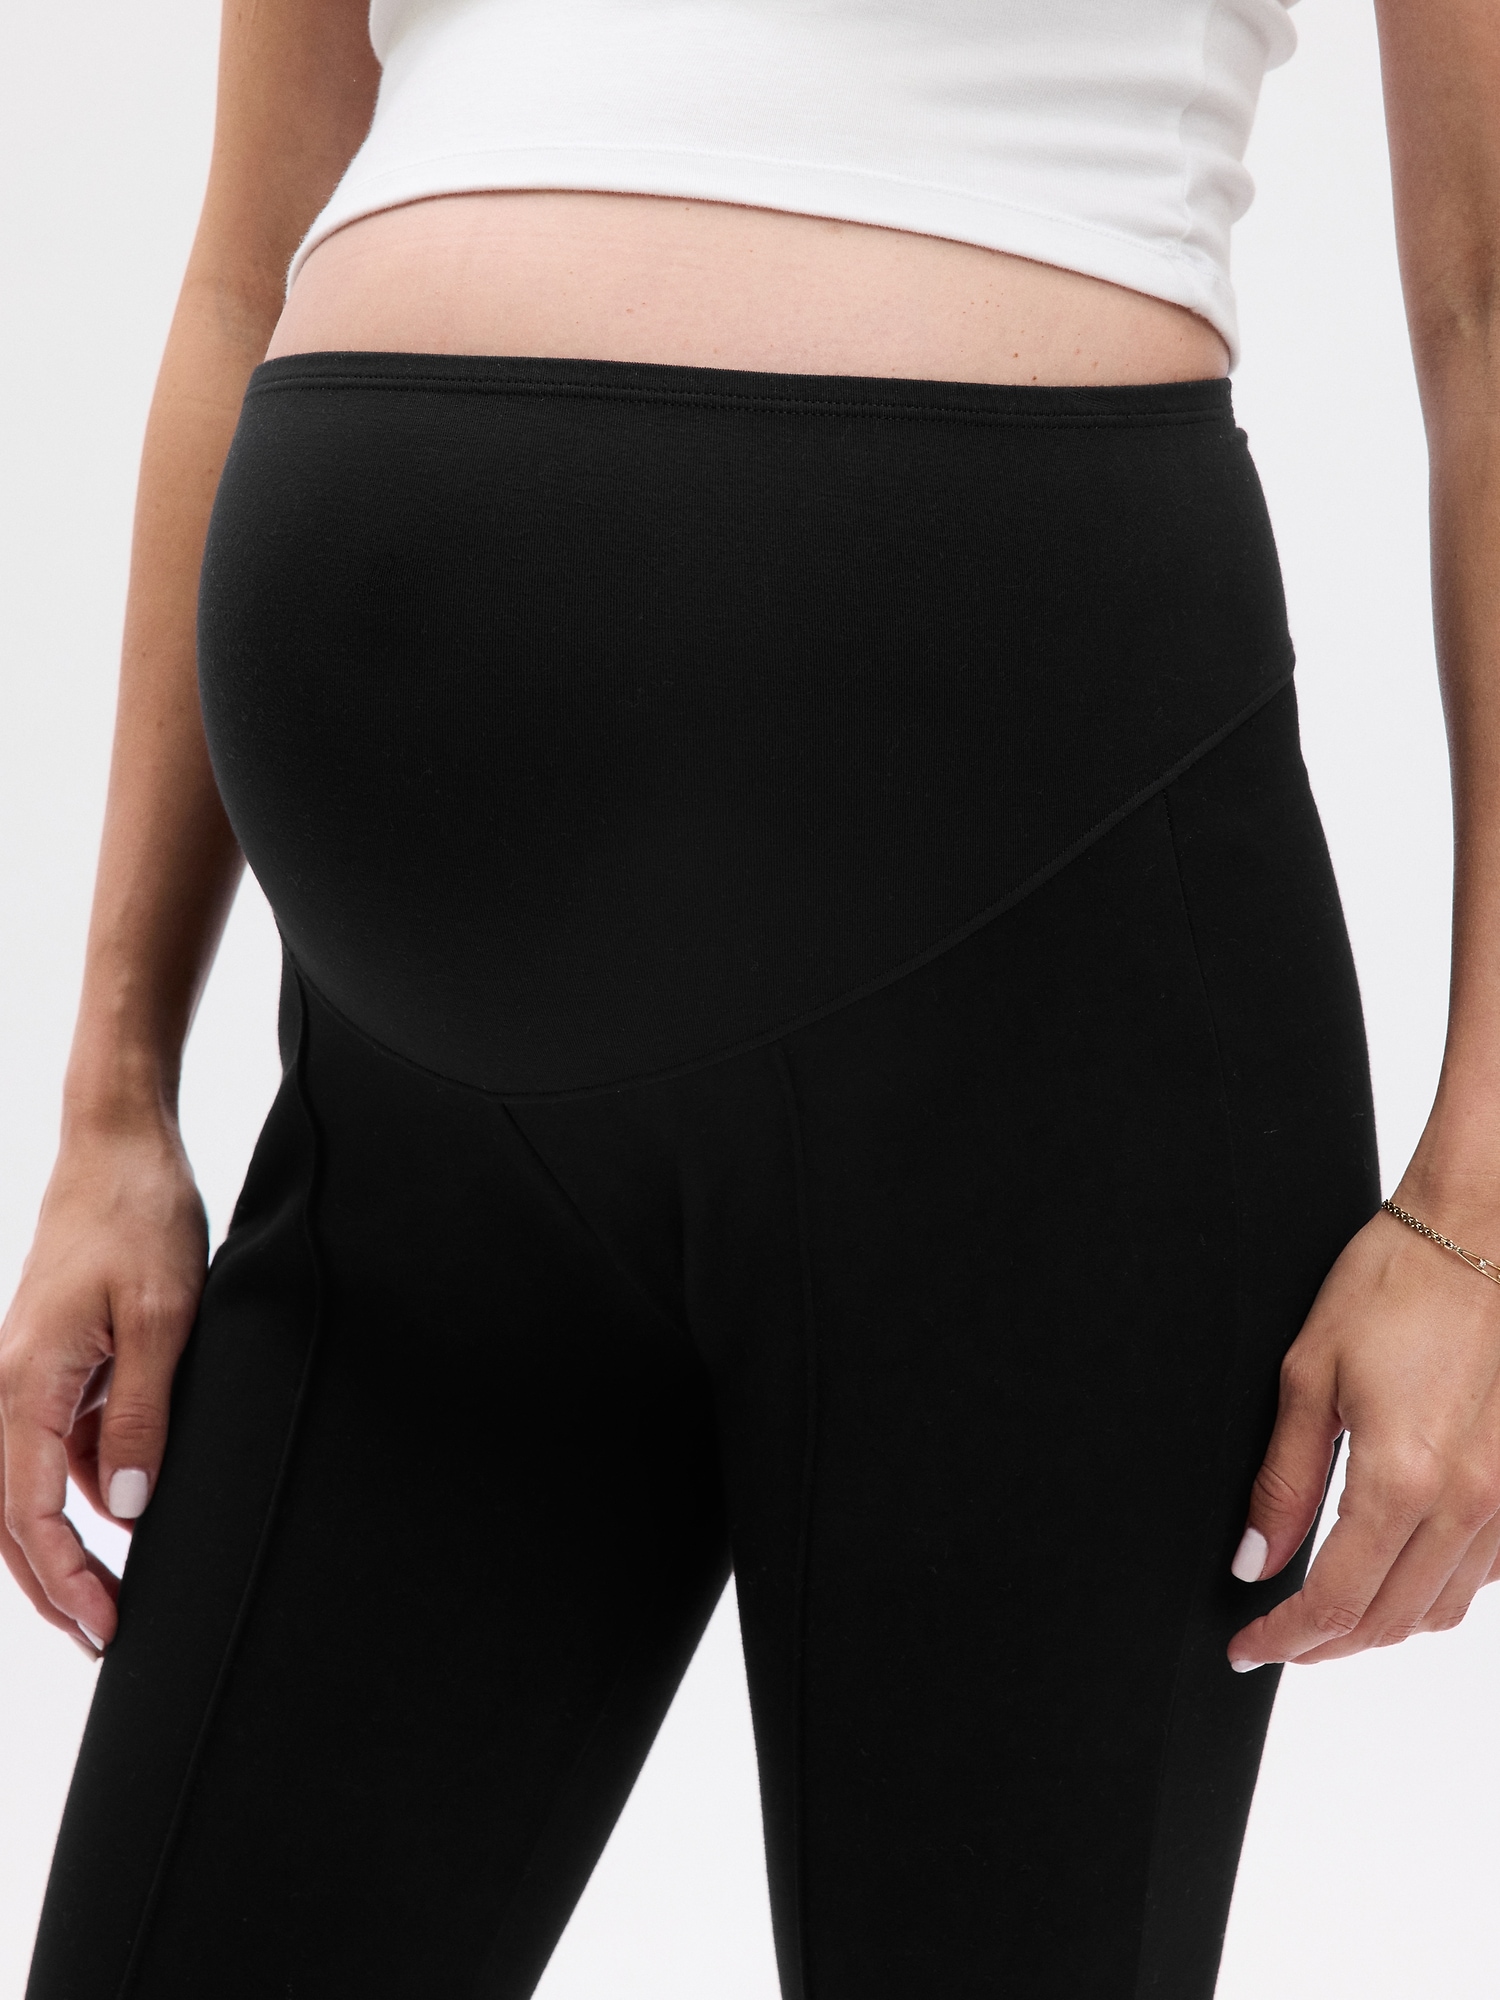 Bcg Polka Dots Black Active Pants Size M - 47% off